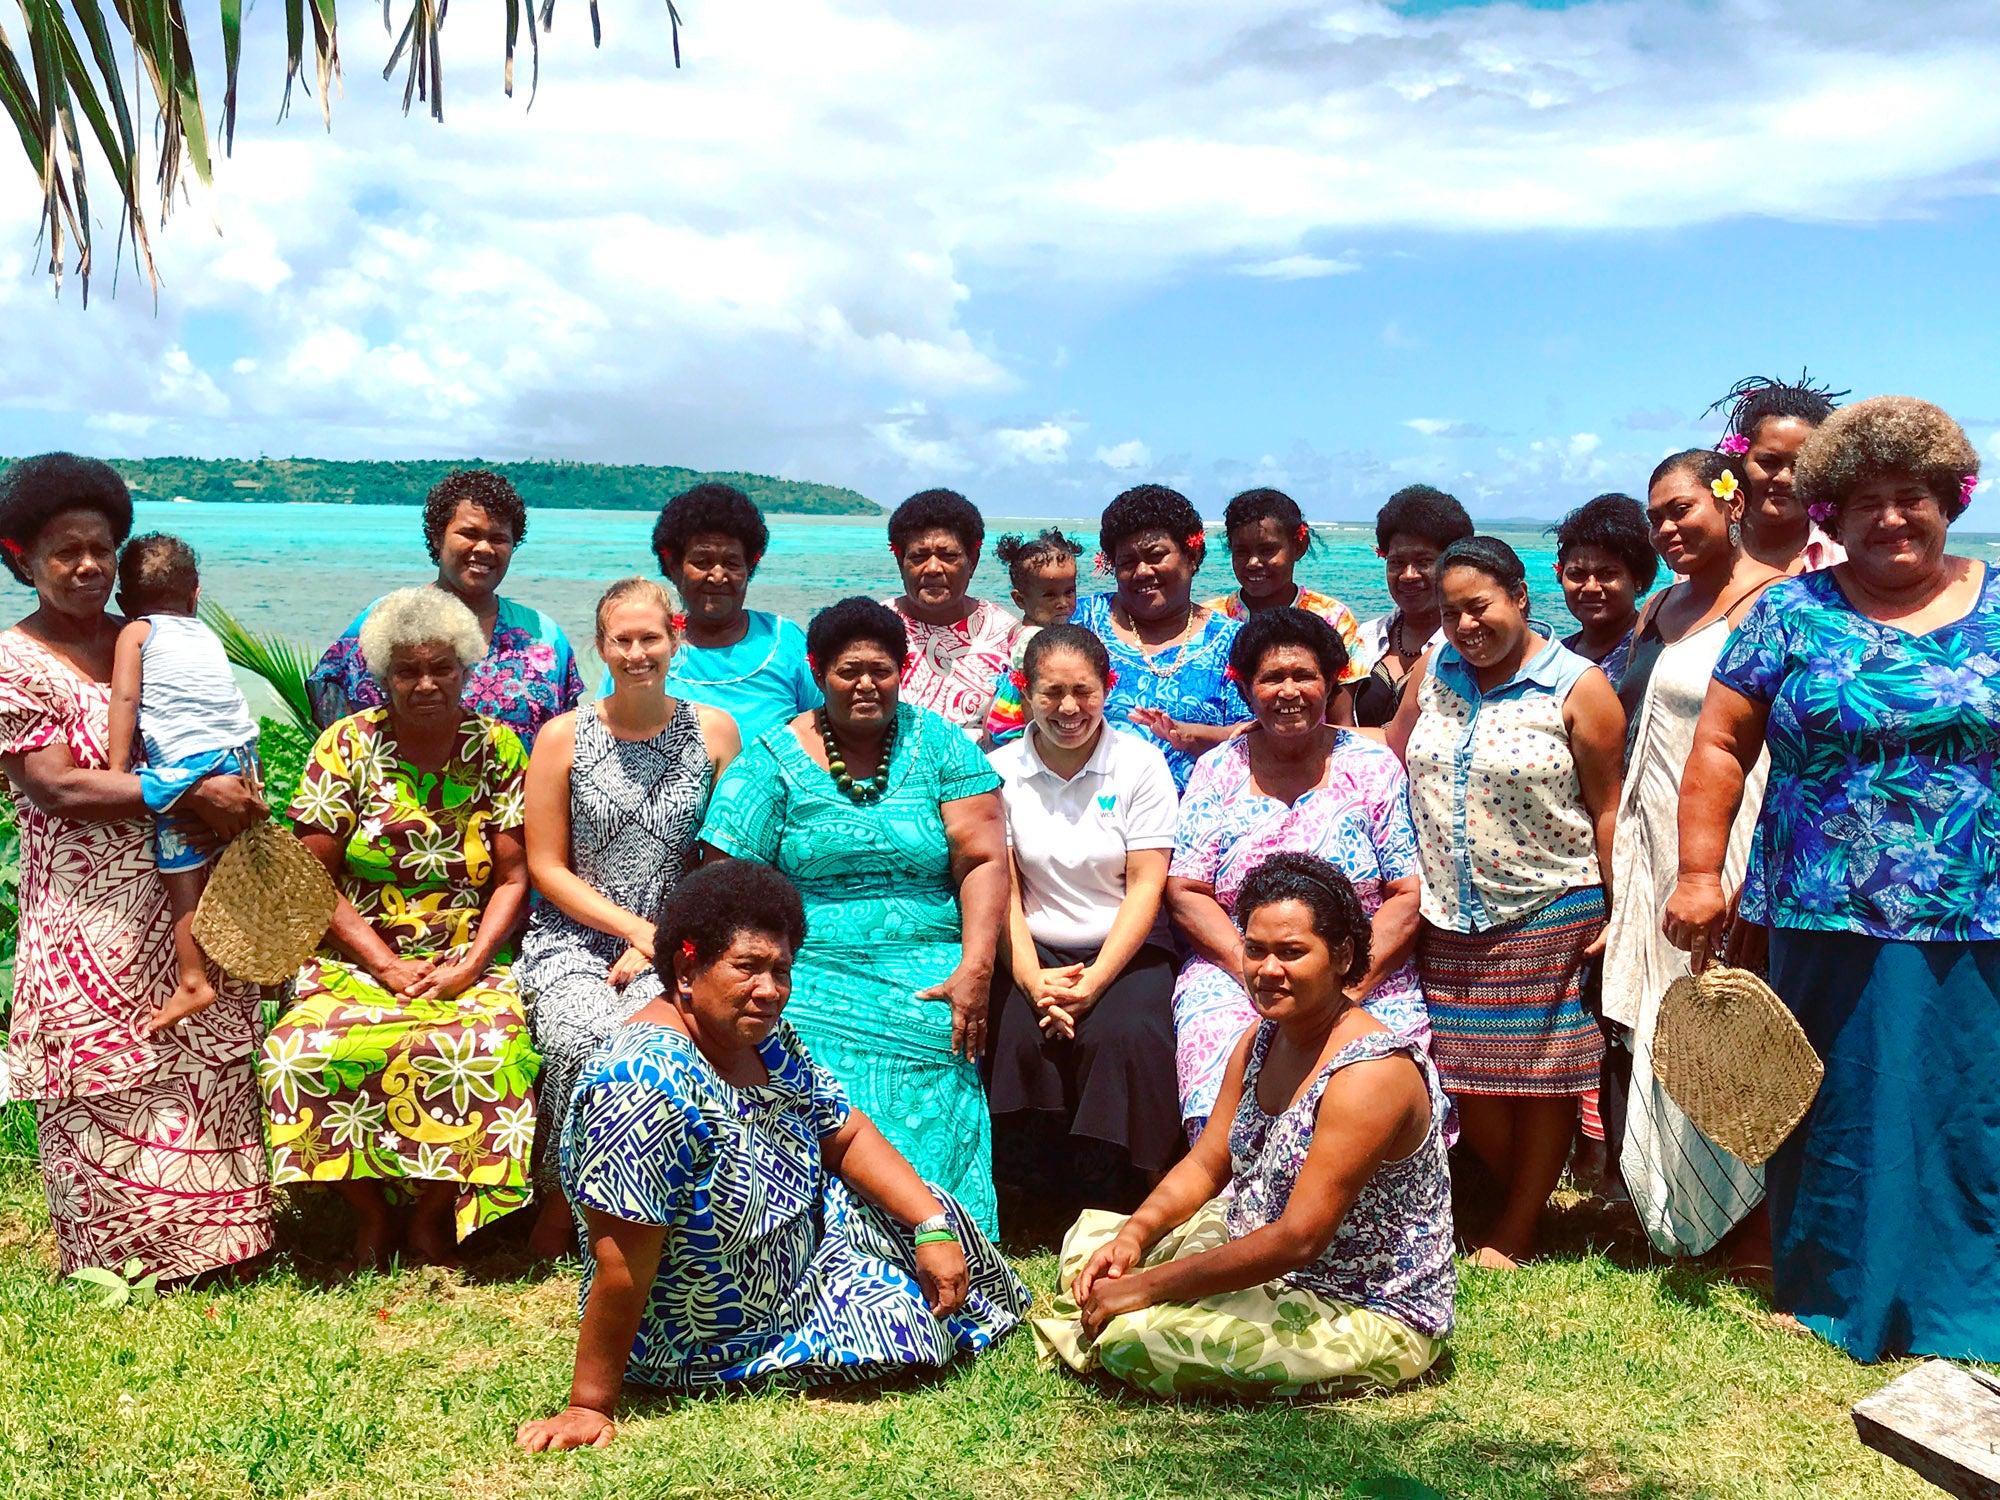 Marine conservation in Fiji through the Vatuvara Foundation